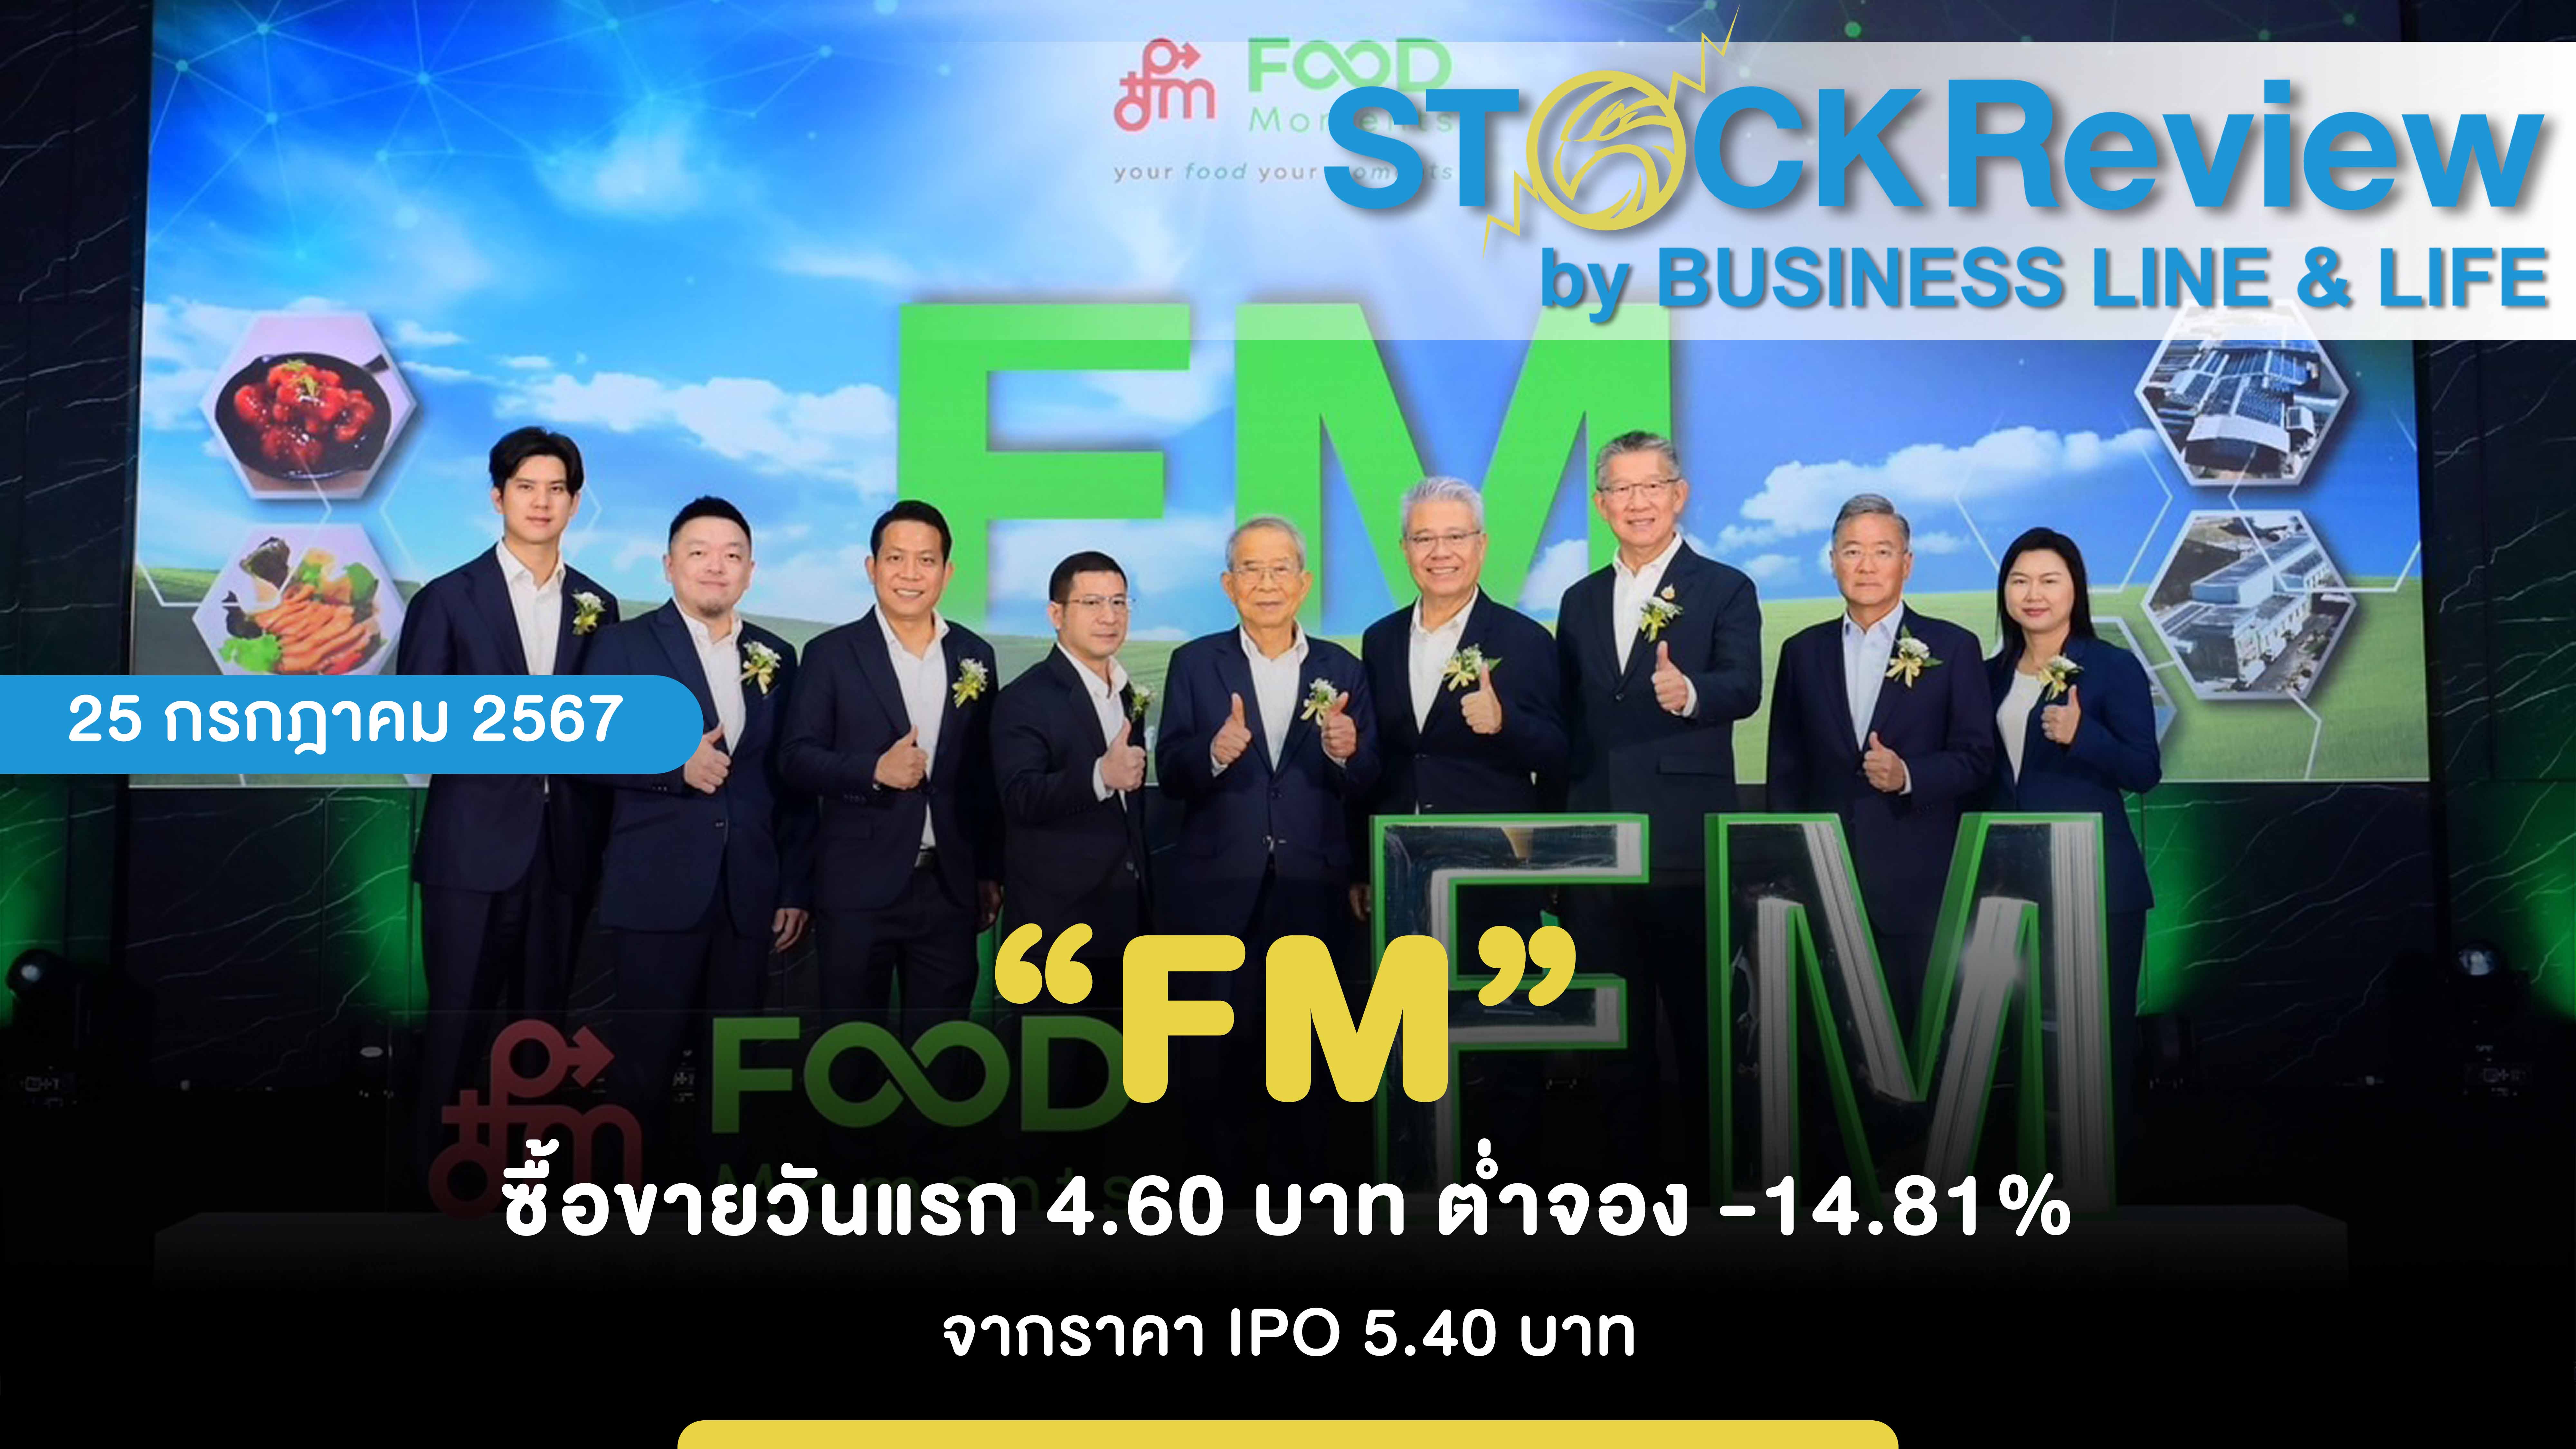 “FM” ซื้อขายวันแรก 4.60 บาท ต่ำจอง -14.81% จากราคา IPO 5.40 บาท